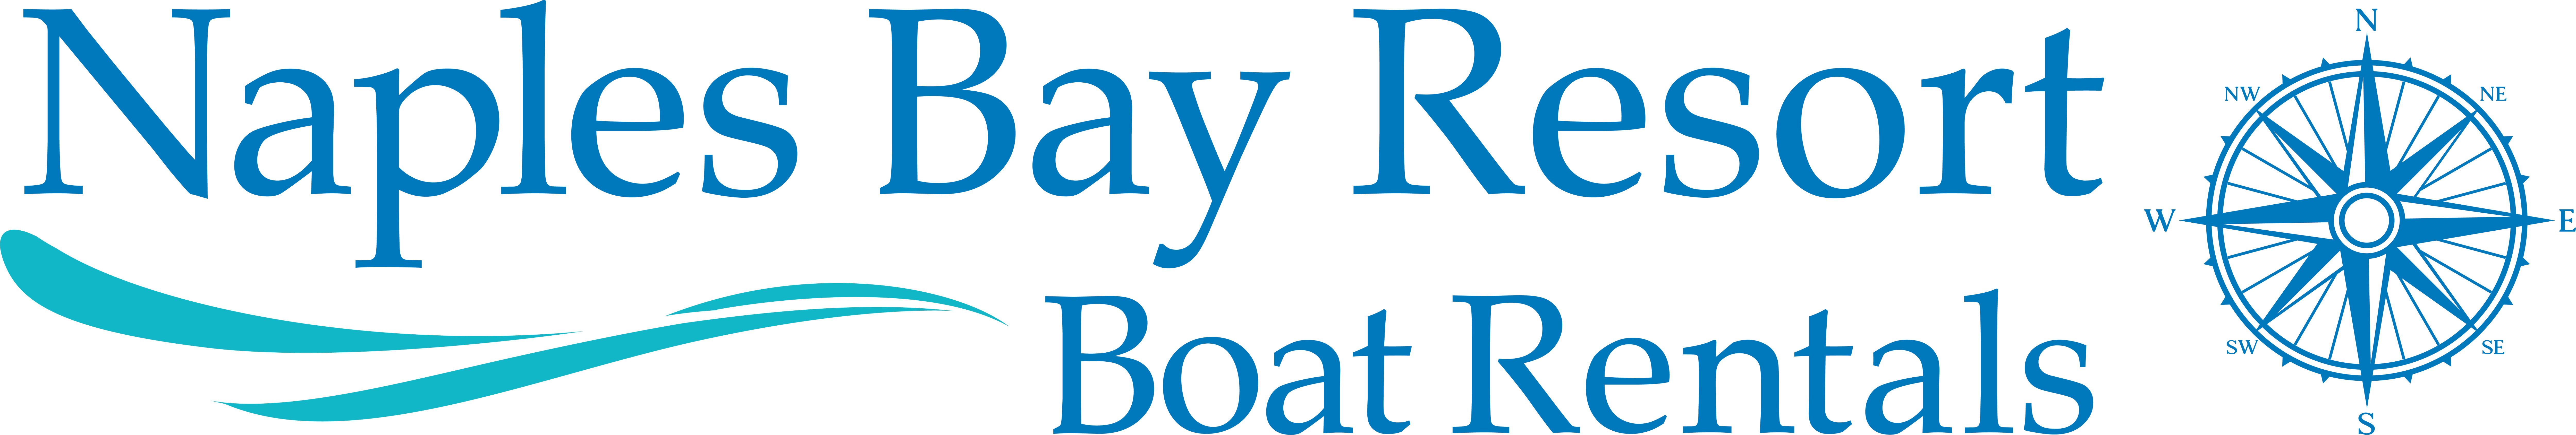 Naples Bay Boat Rentals Home